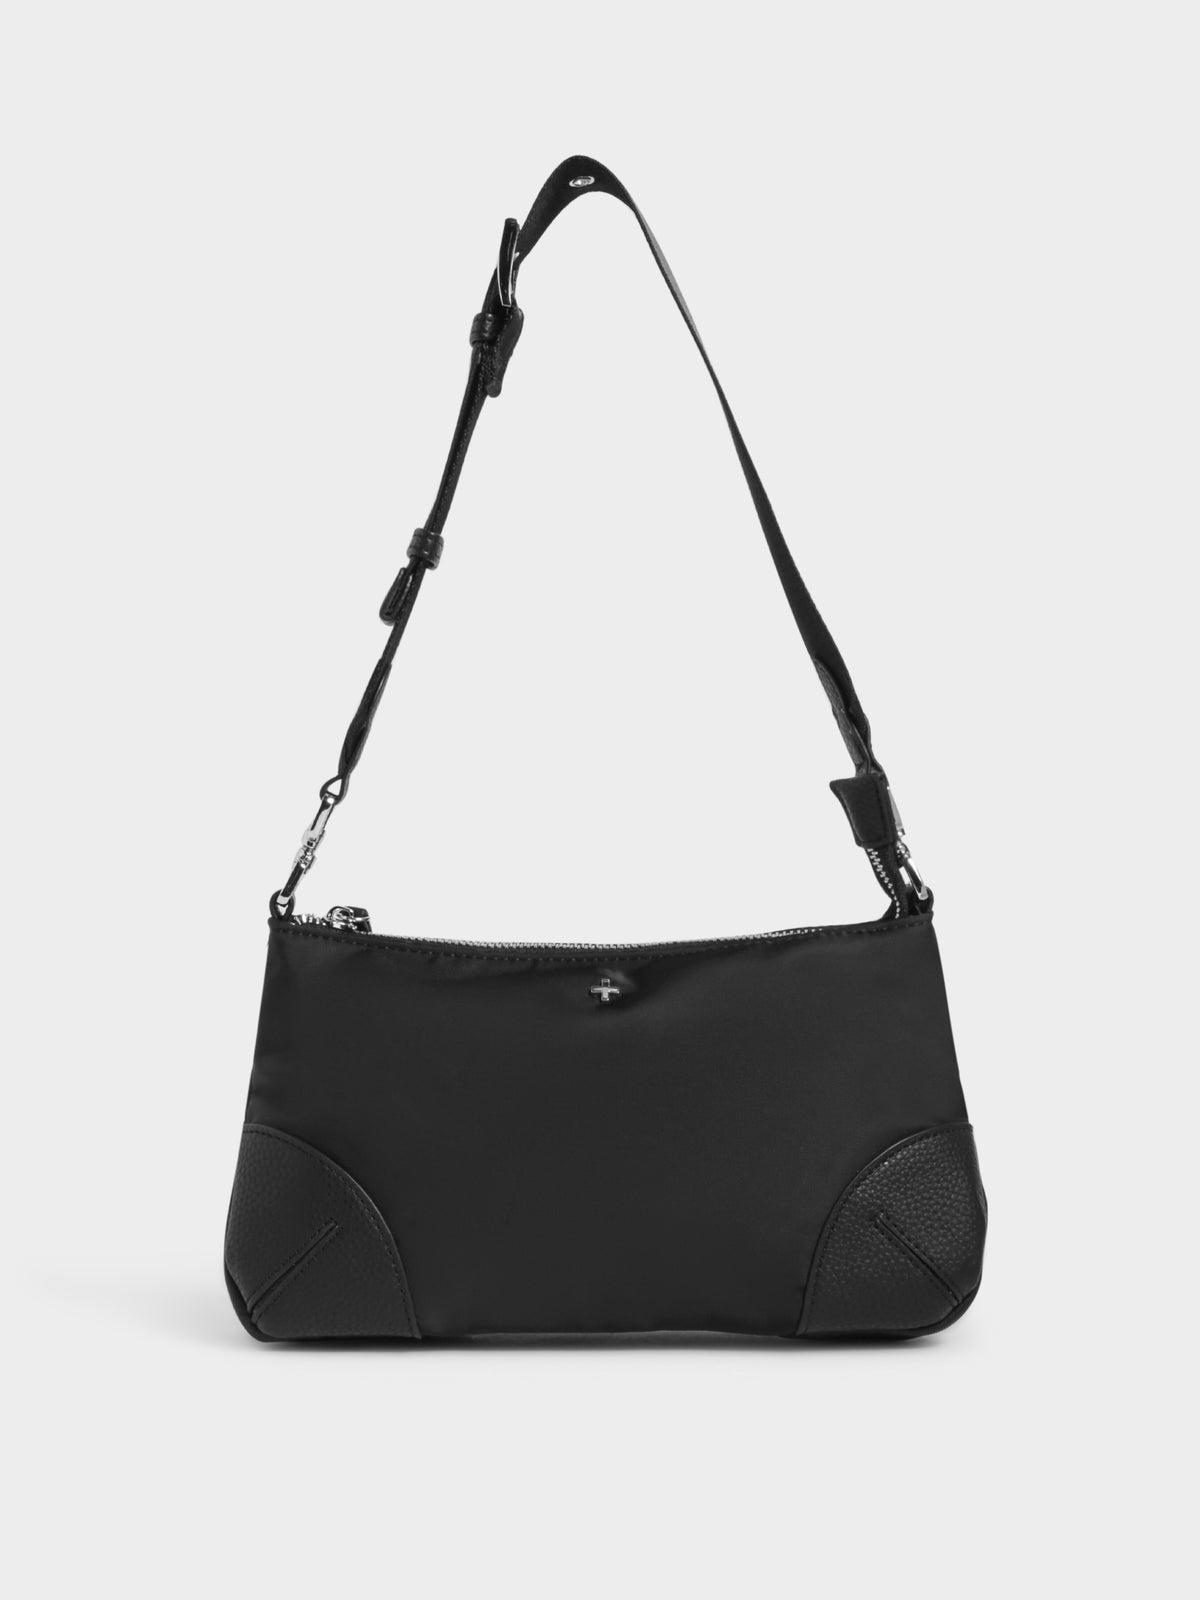 Princeton Bag in Black